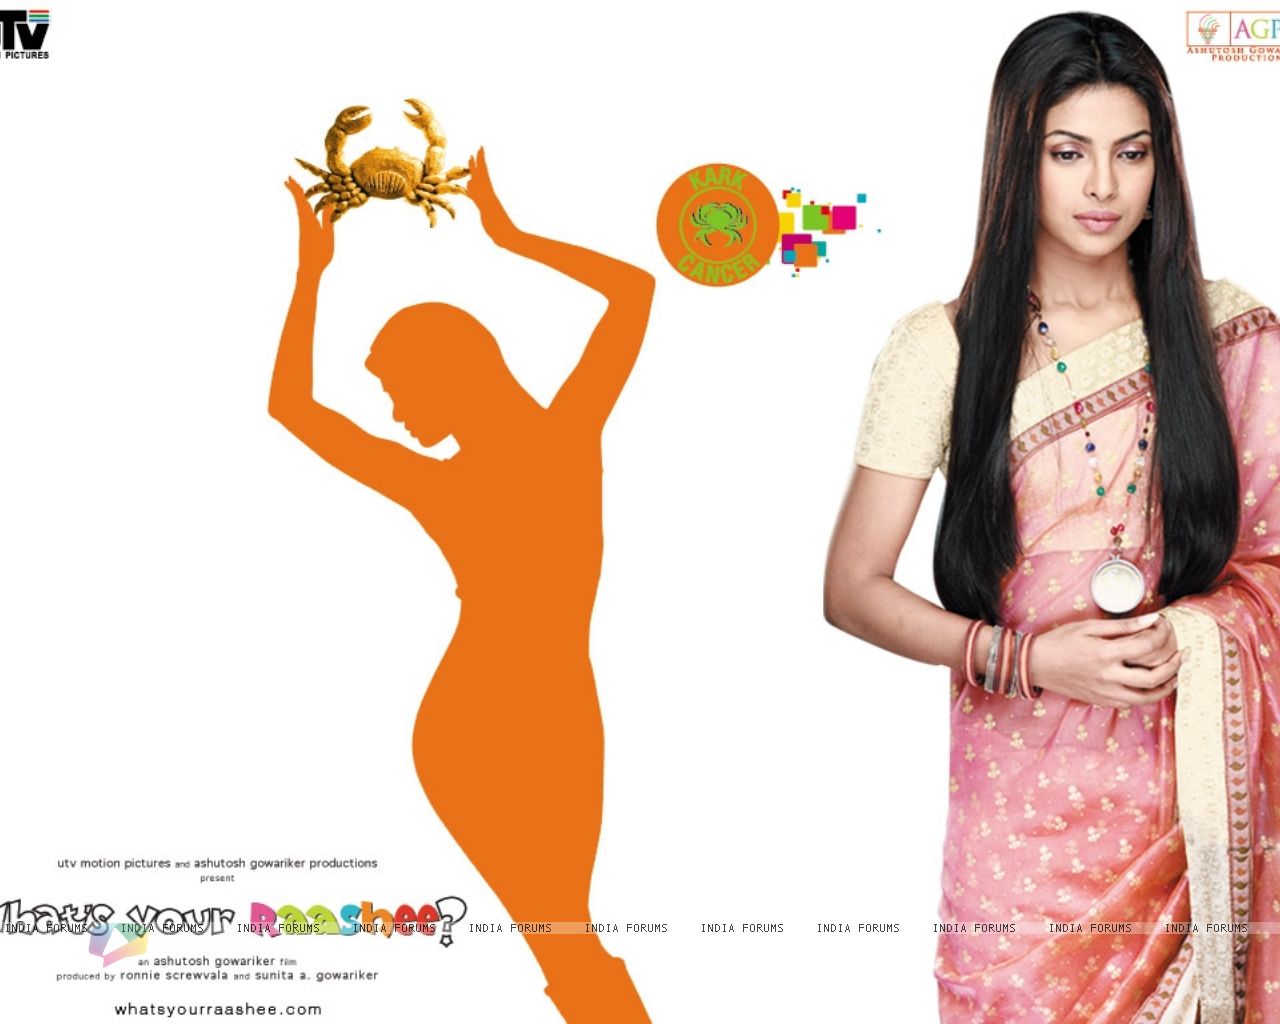 Wallpaper Whats Your Raashee With Priyanka Chopra